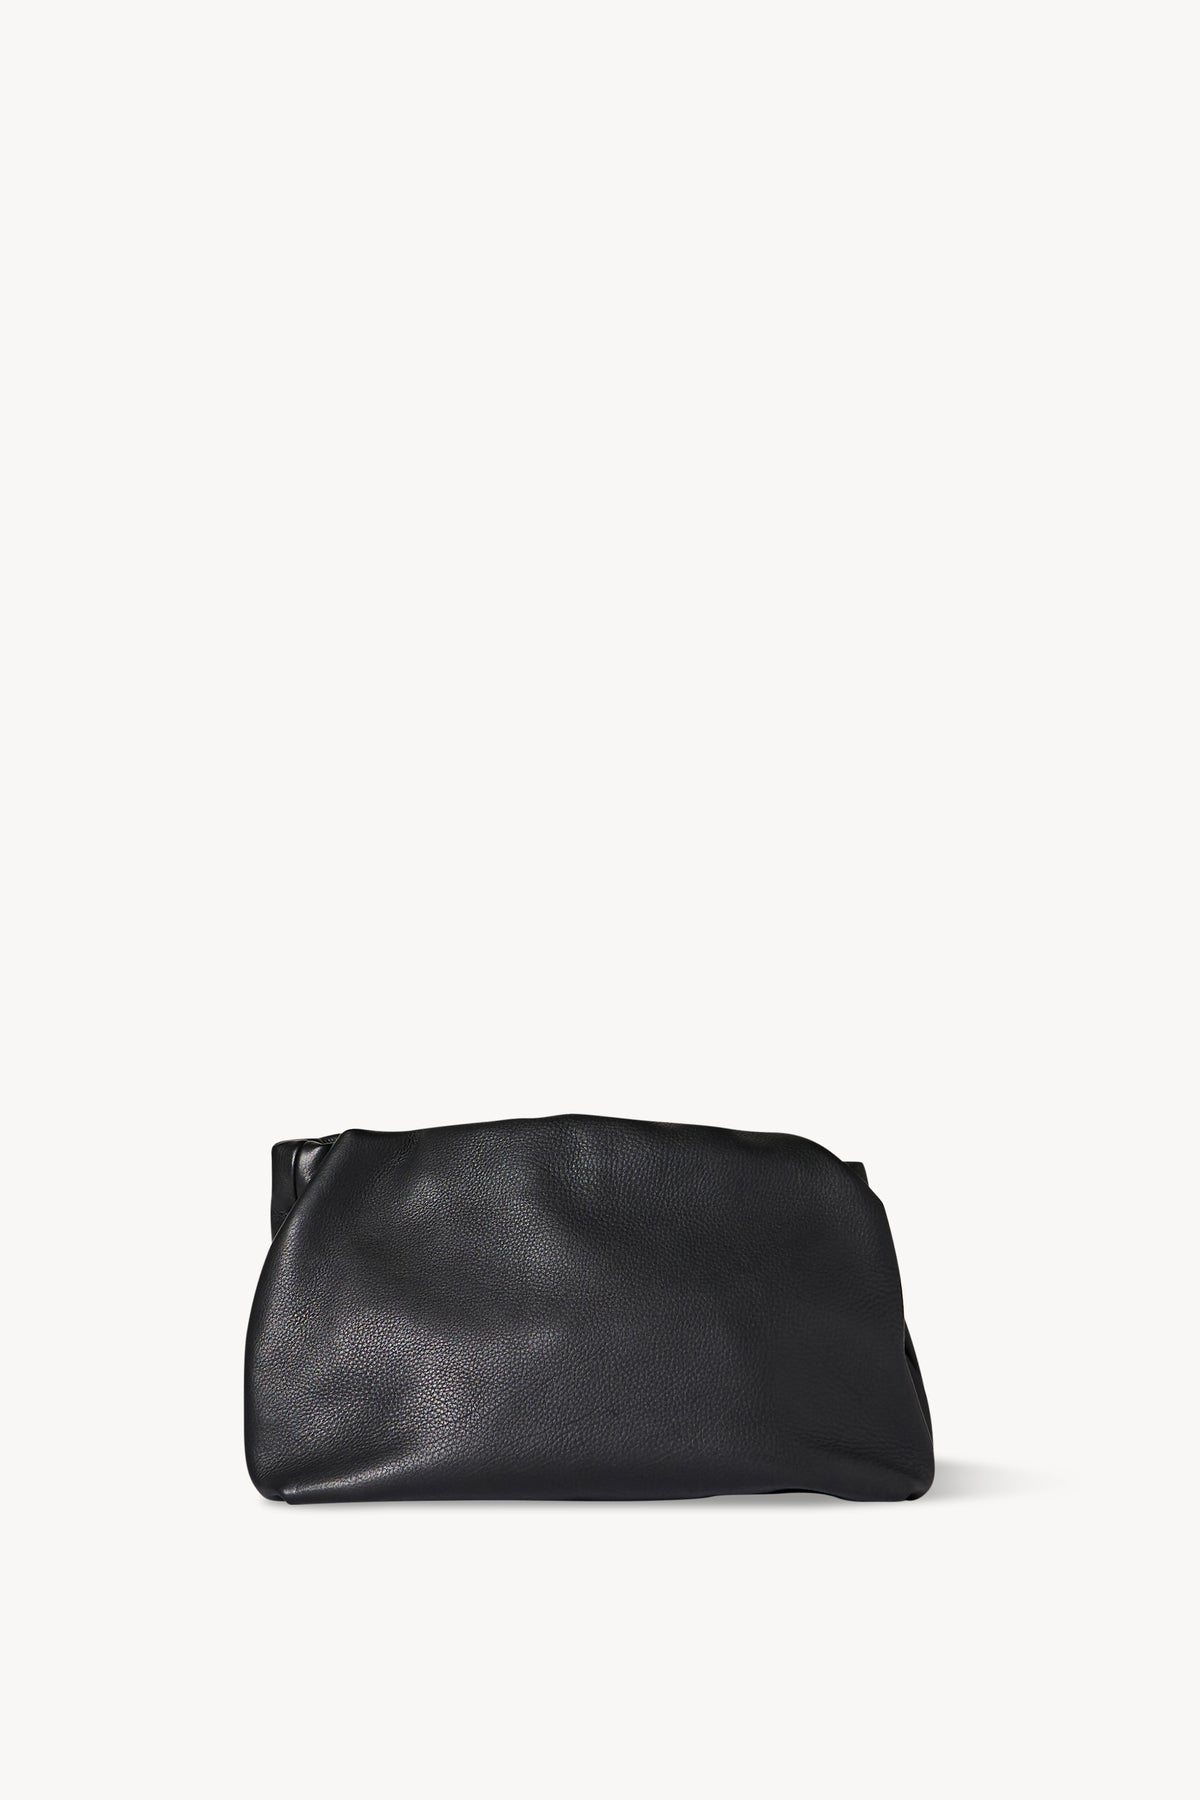 Single Handle Leather Clutch Bag